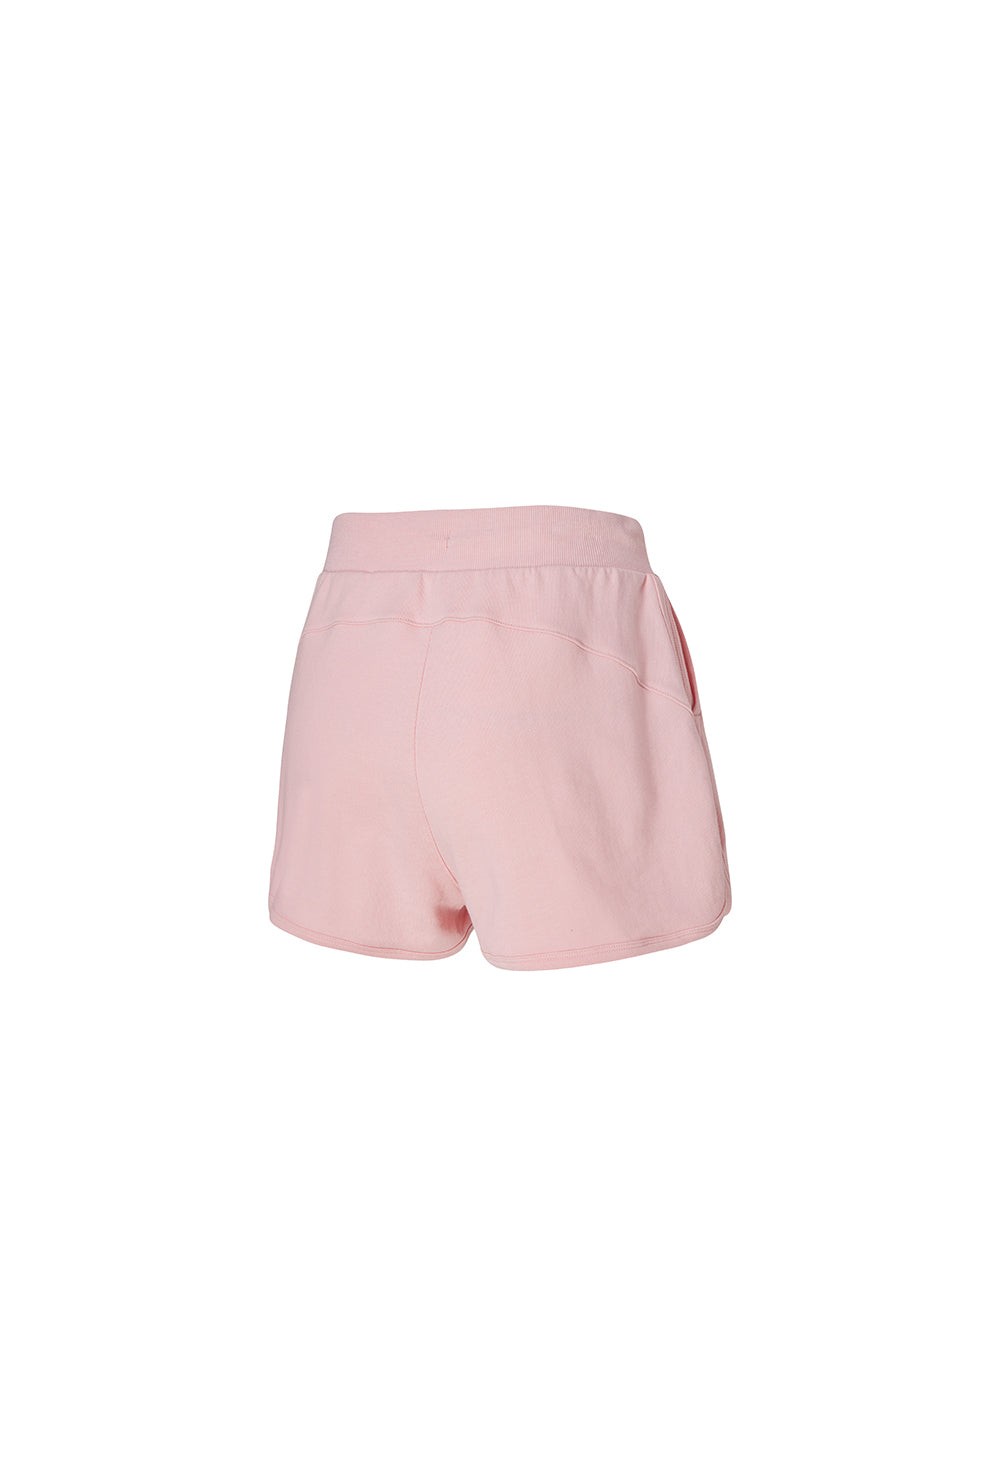 XXMX Daily Cotton Shorts - Sugar Pink